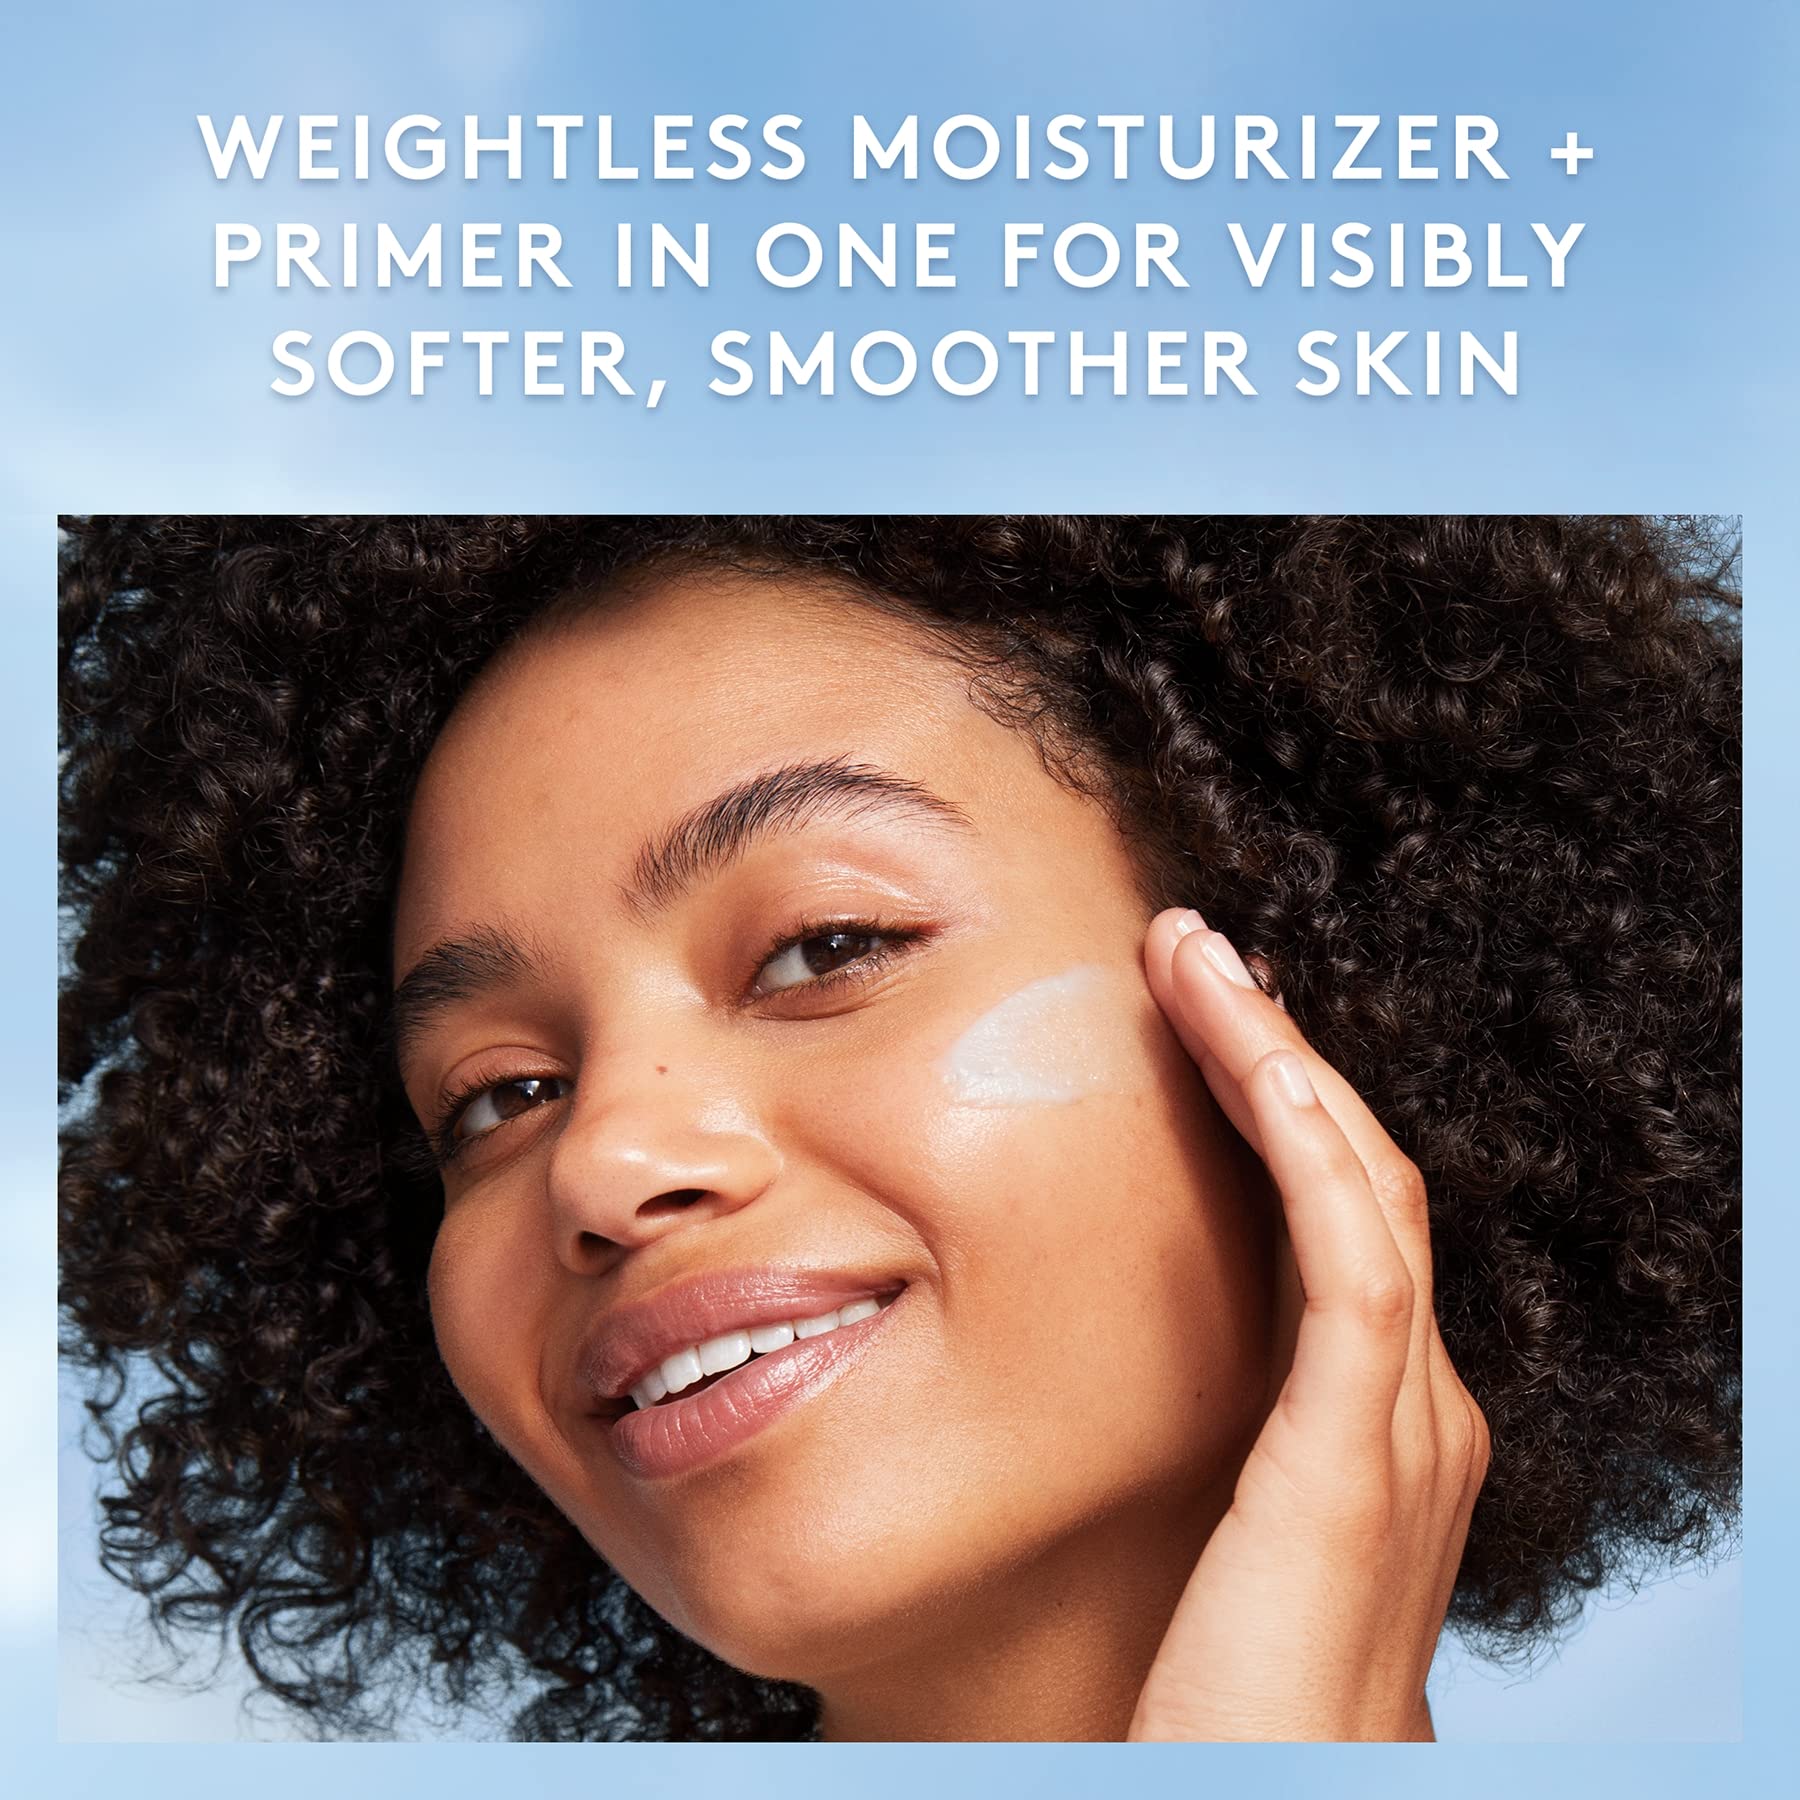 COVERGIRL Clean Fresh Skincare Weightless Water Cream